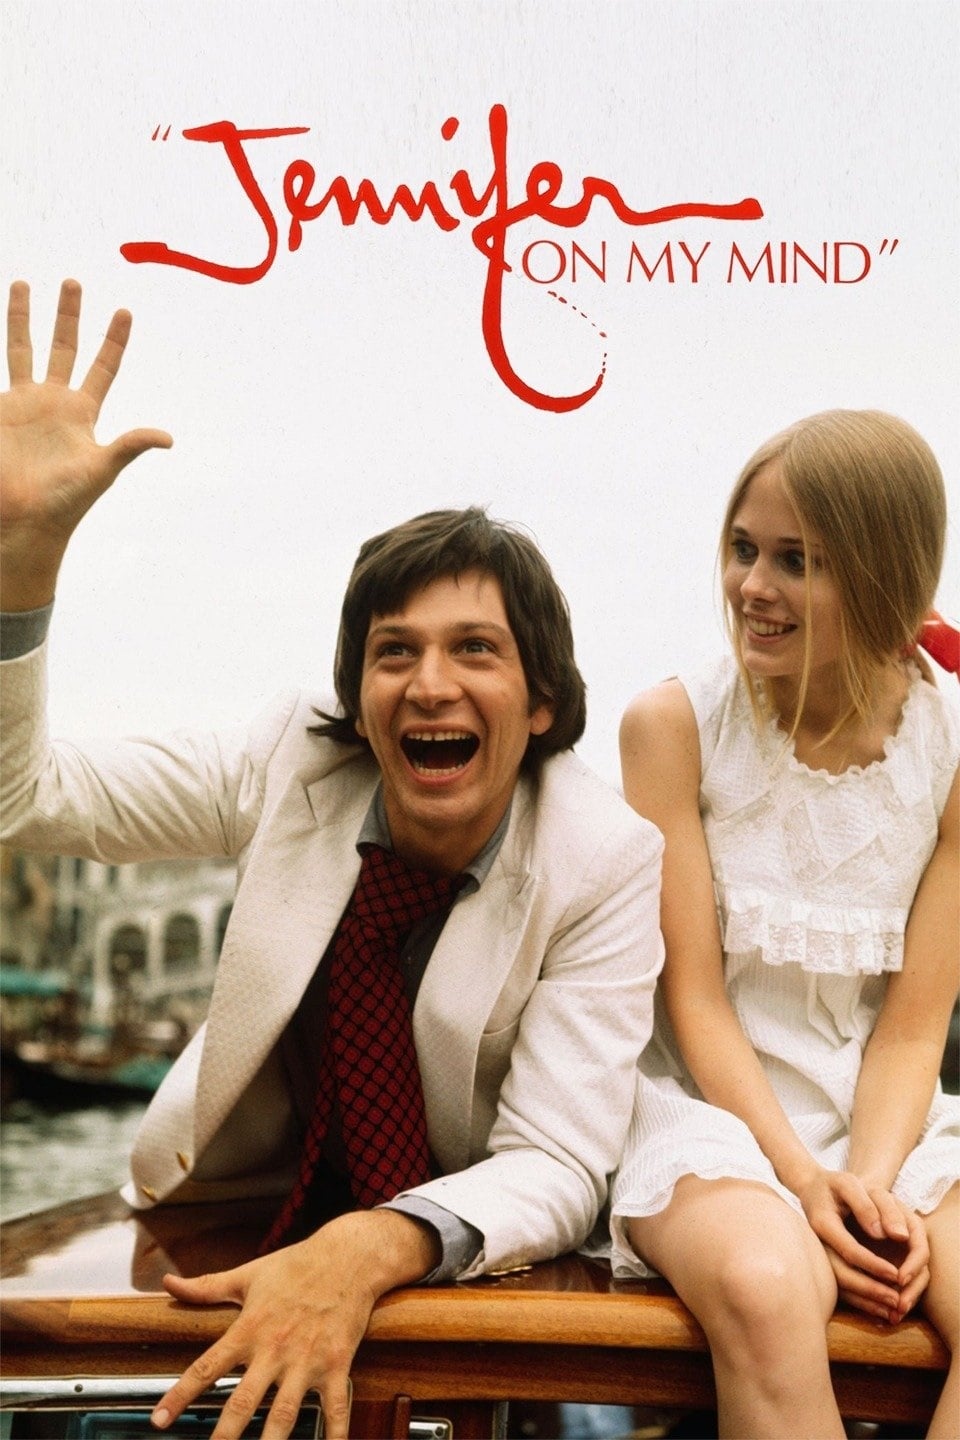 Plakat von "Jennifer on My Mind"